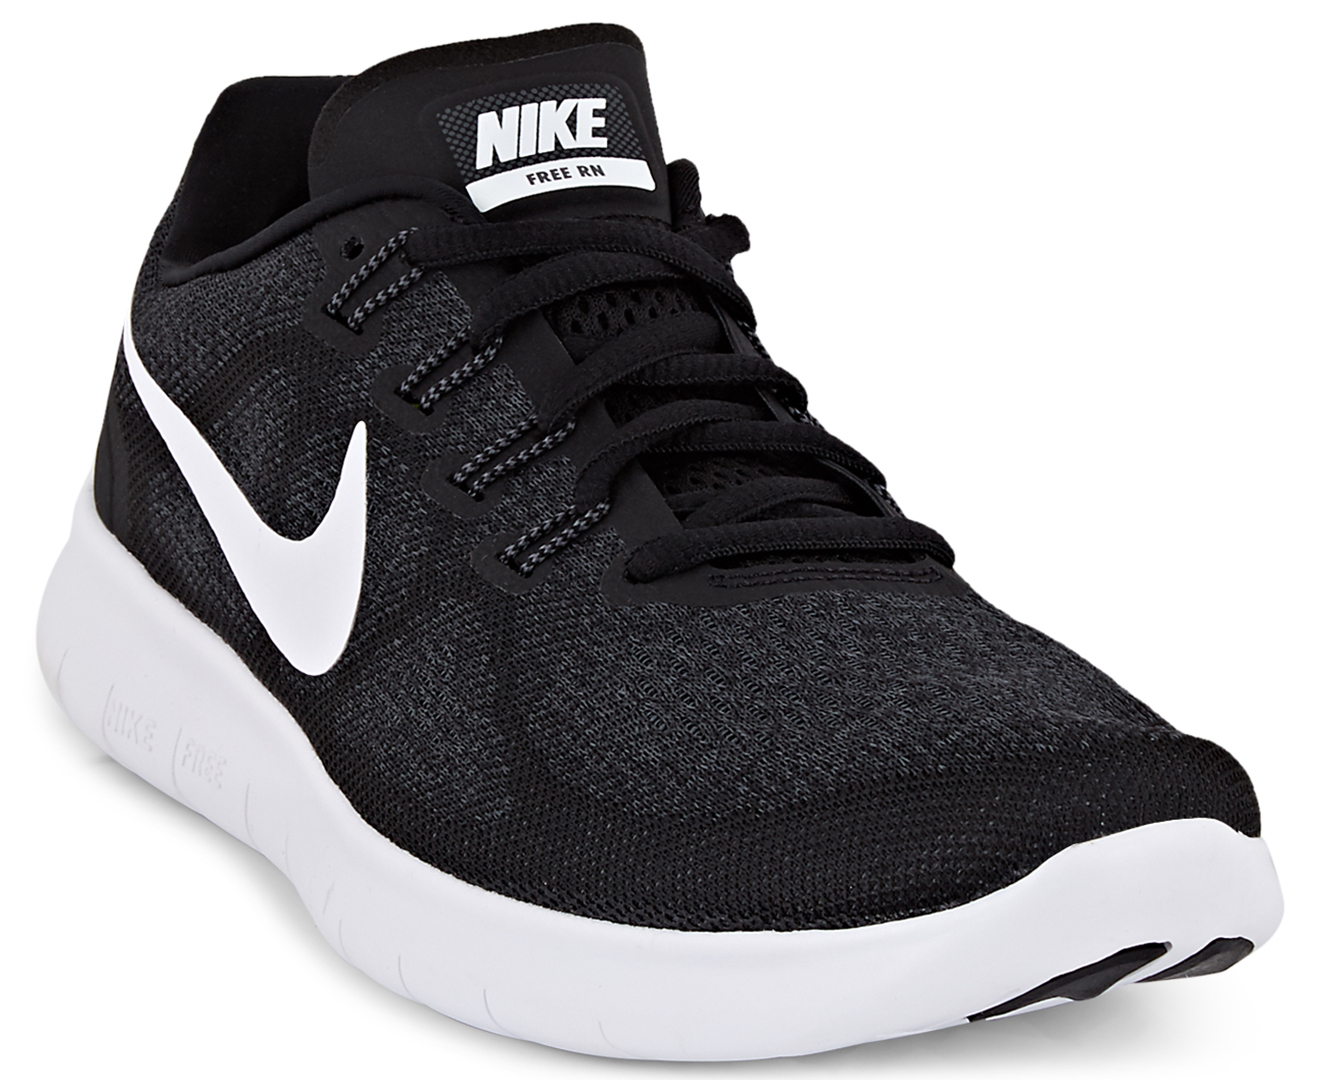 Nike Women's Free Run 2017 Shoe - Black/White-Dark Grey | Catch.co.nz